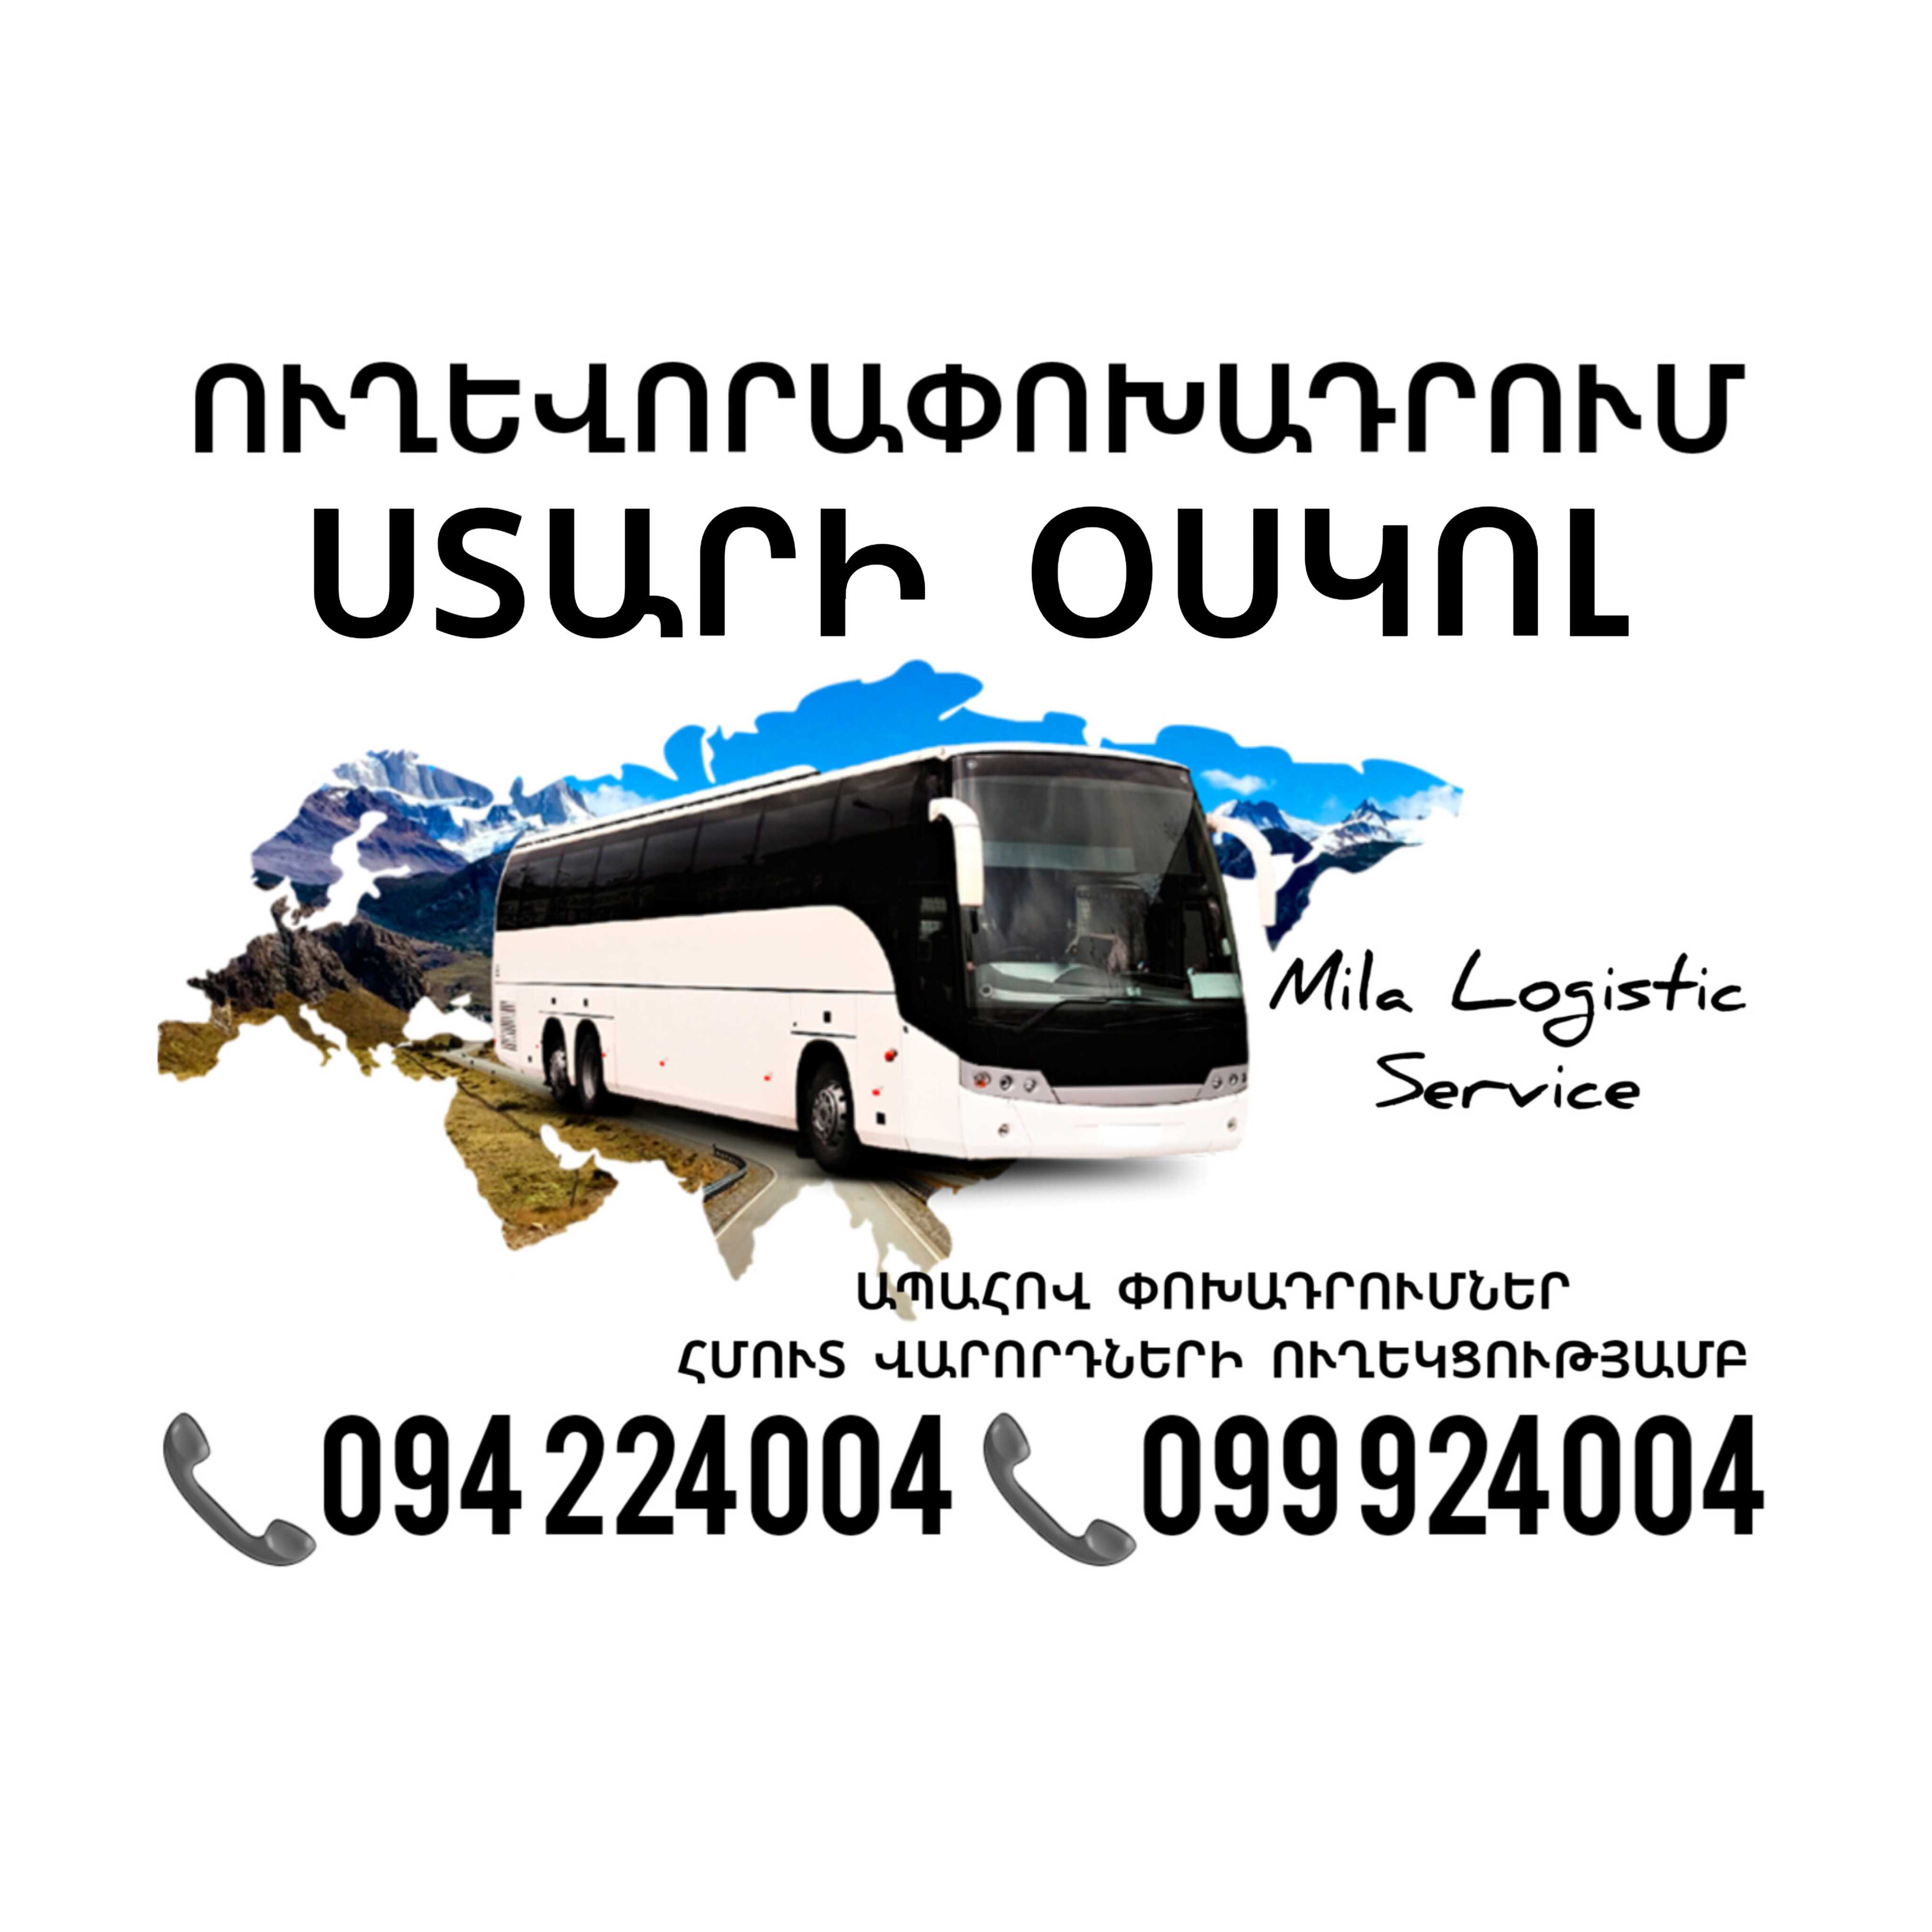 Erevan STARI OSKOL Uxevorapoxasdrum ☎️(094)224004 ☎️(099)924004